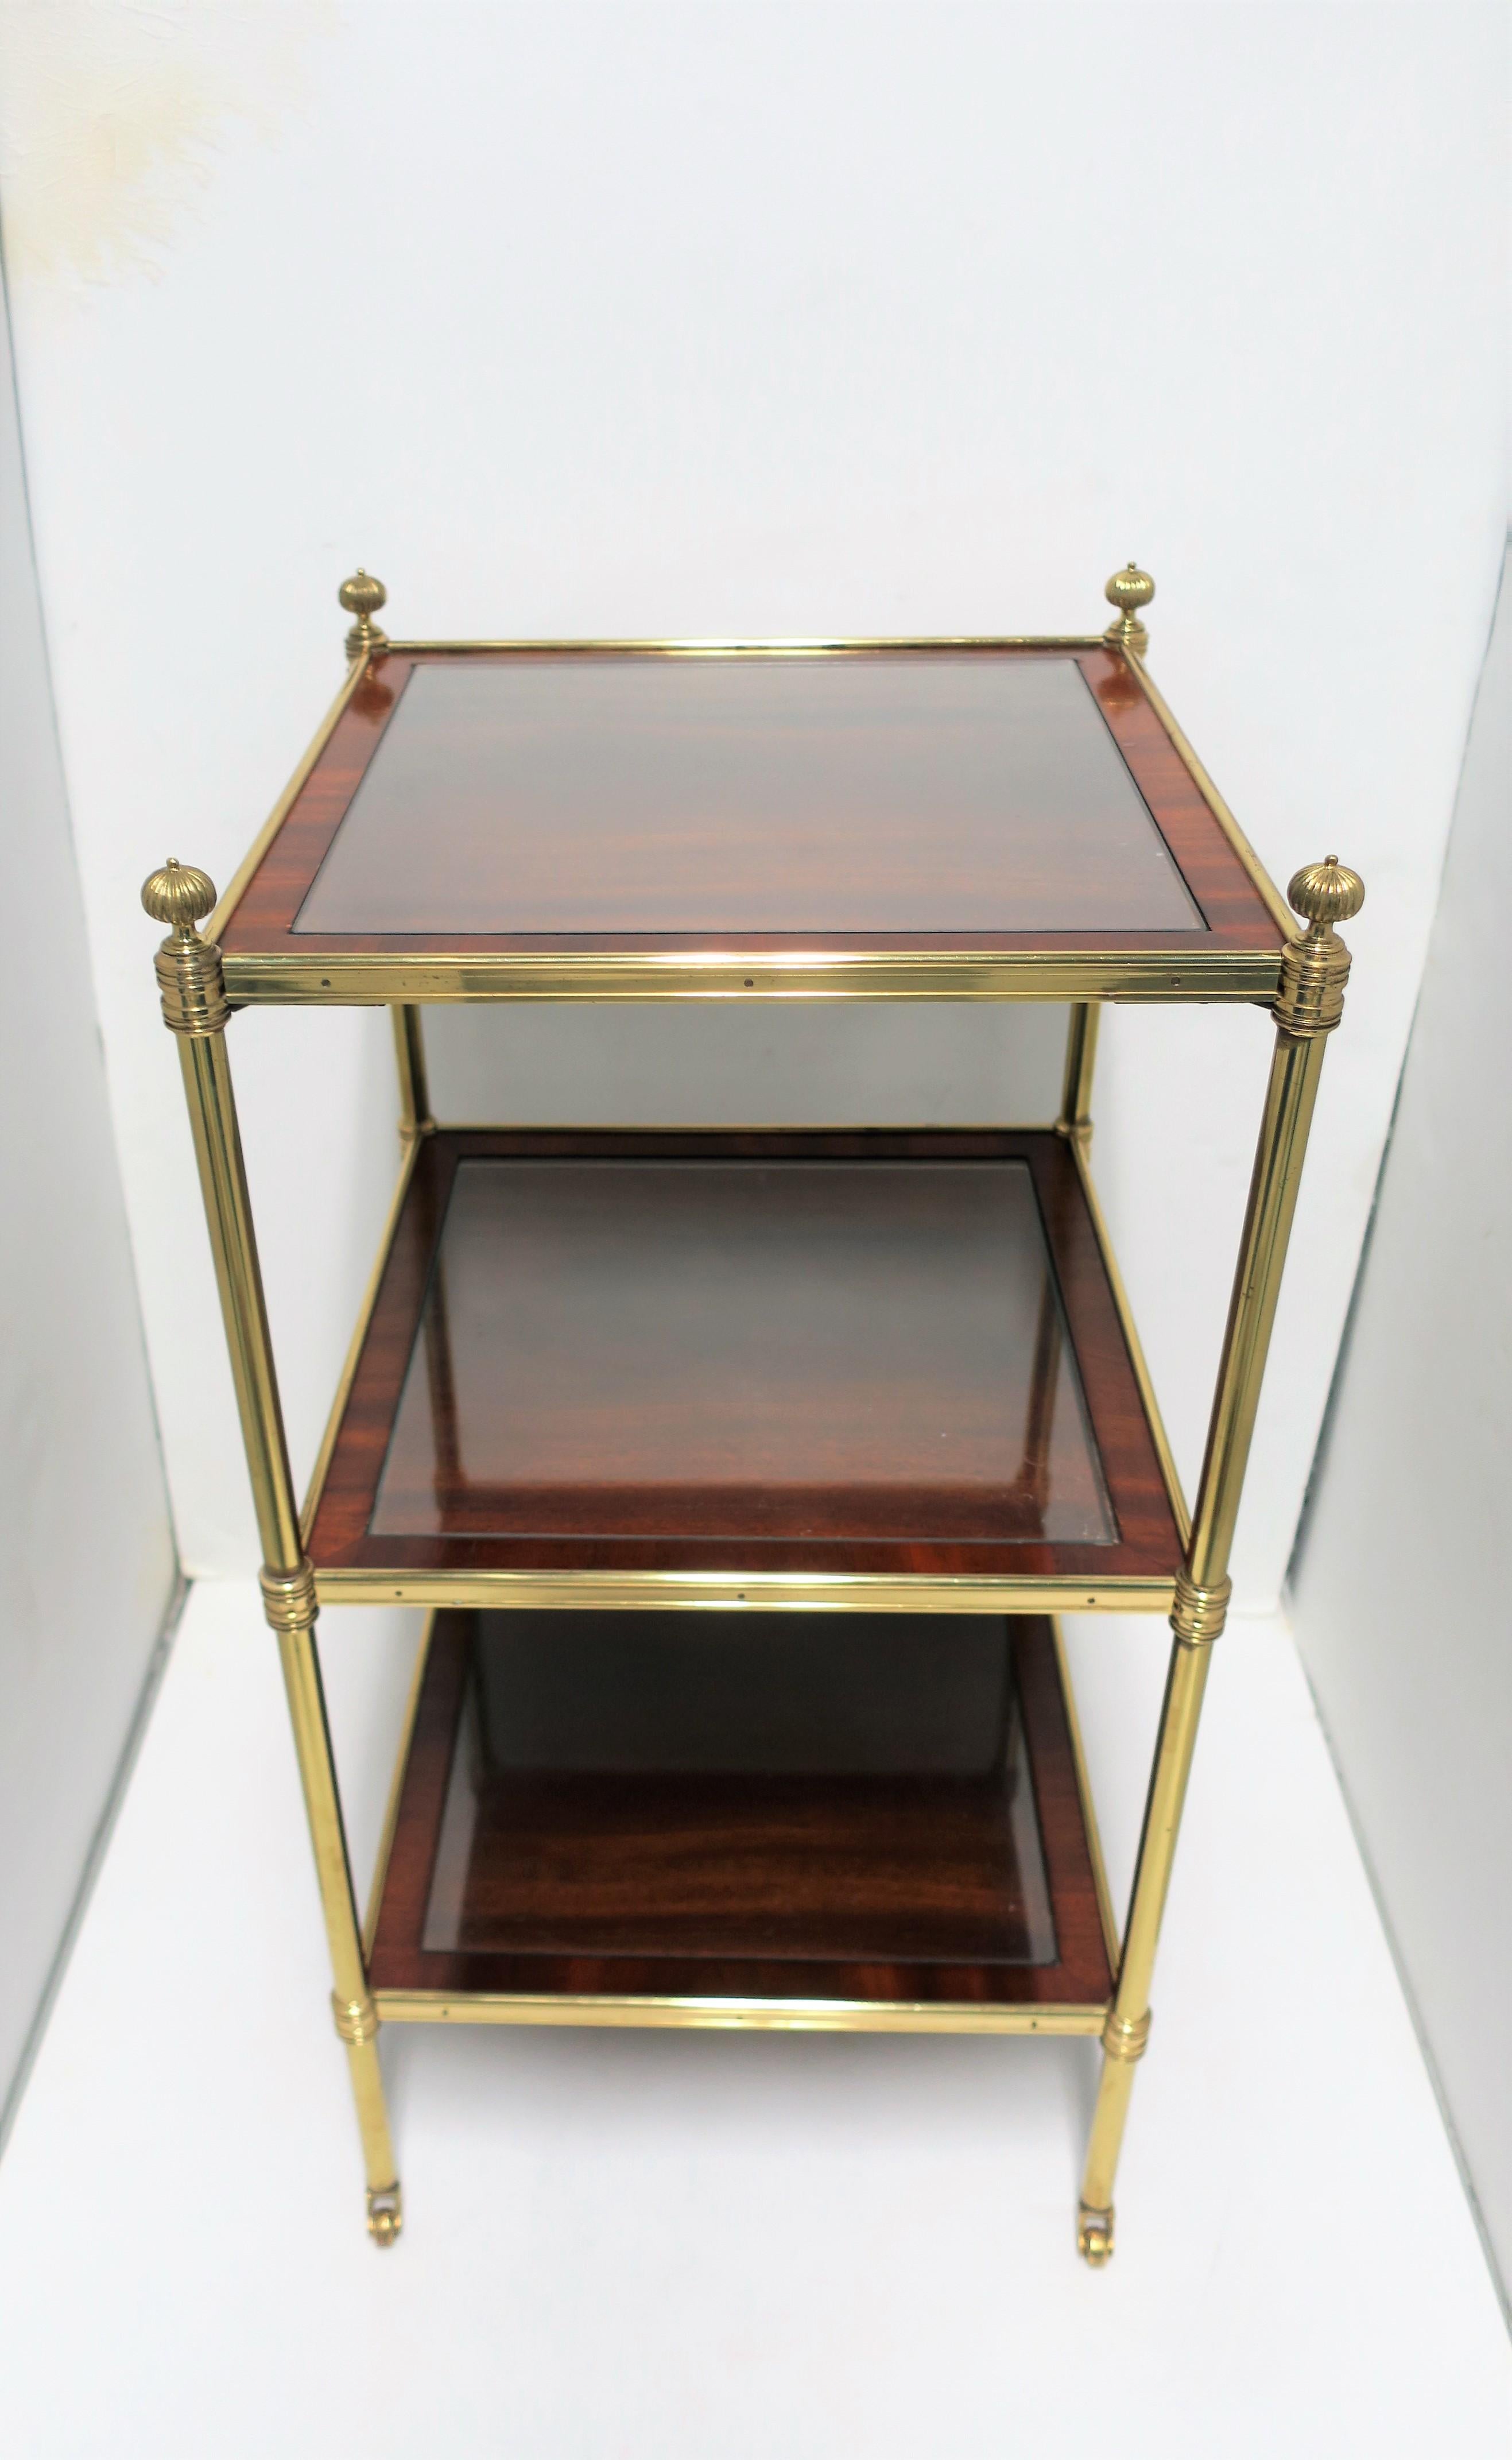 Designer English Regency Brass Glass Mahogany Table Shelves by William Tillman 9